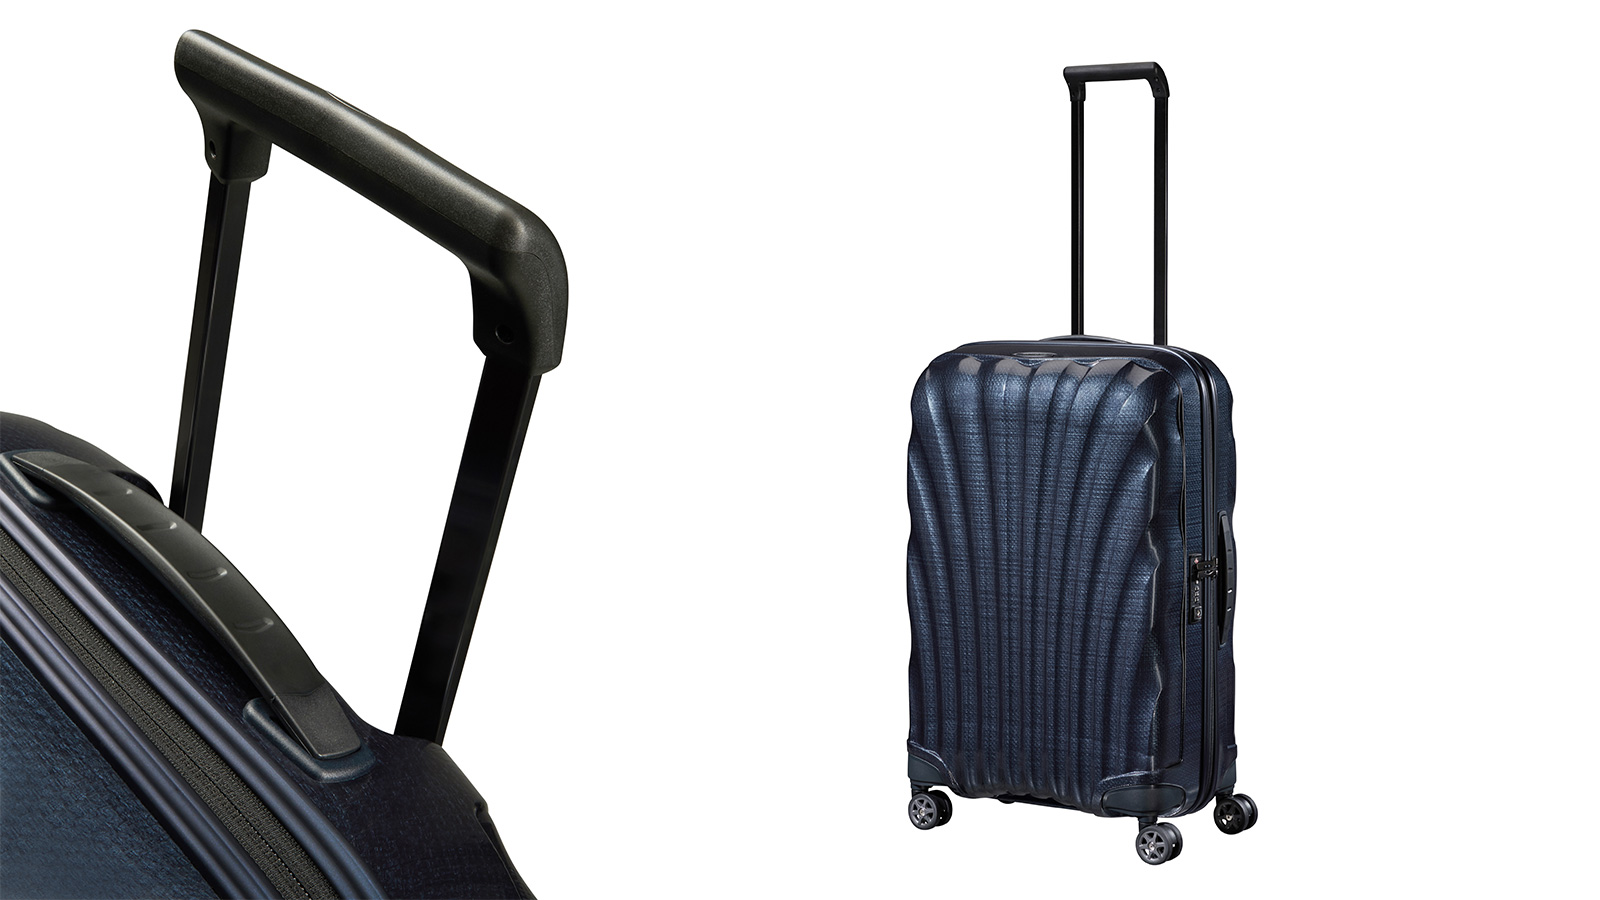 Samsonite C-lite luggage with retractable handle